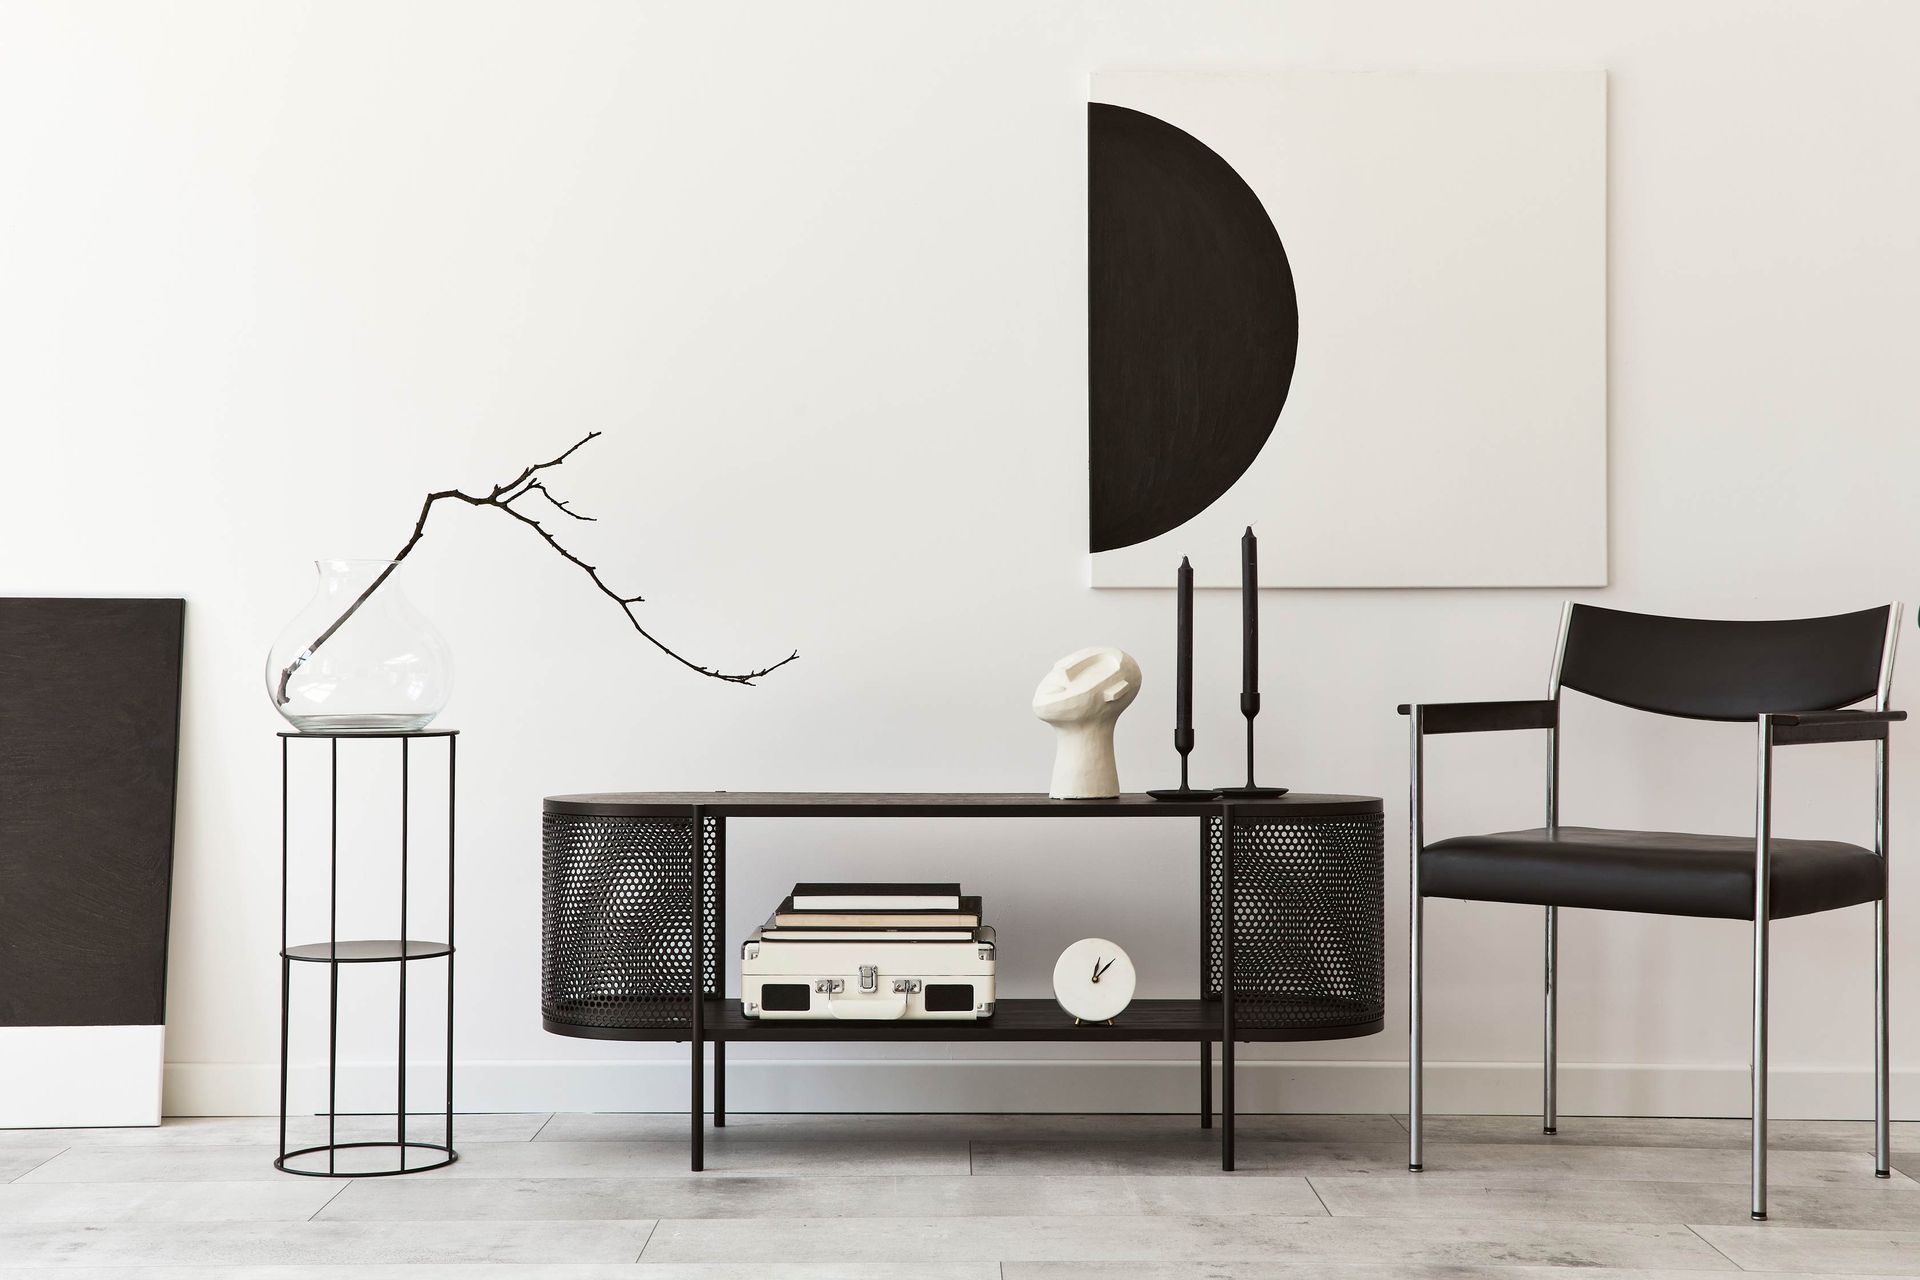 interior design modern living room